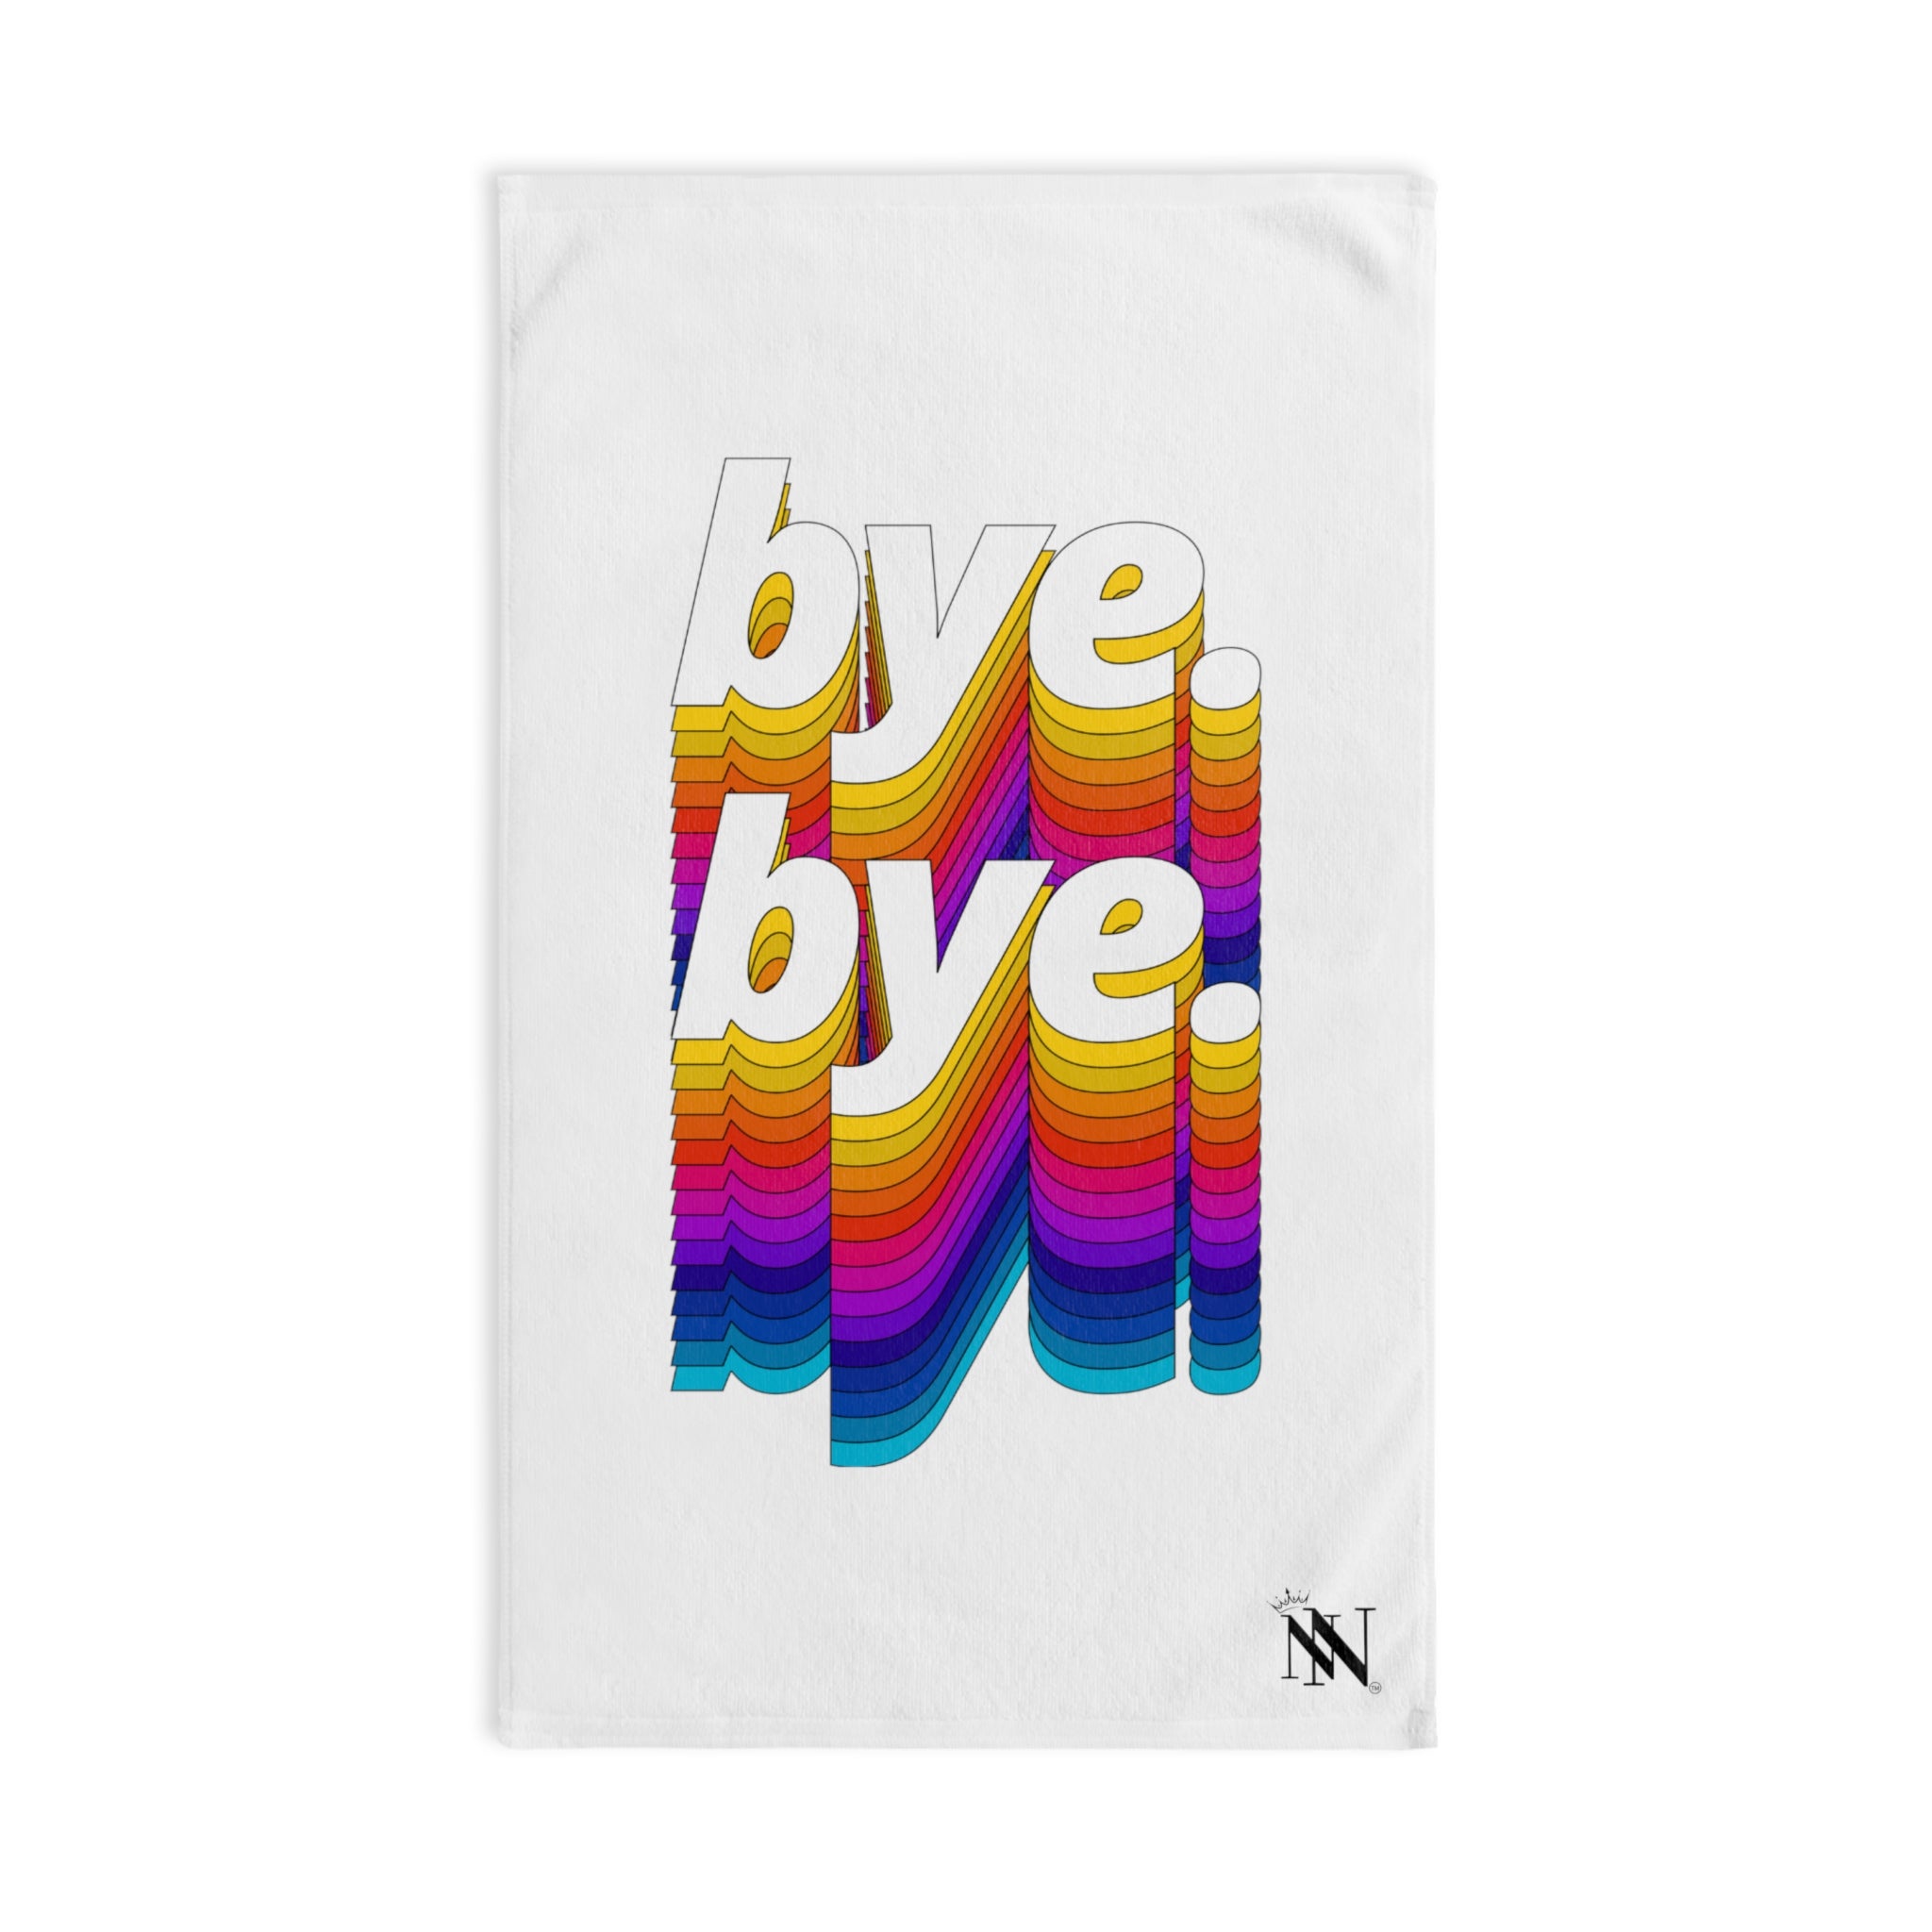 Bye bye sex towel